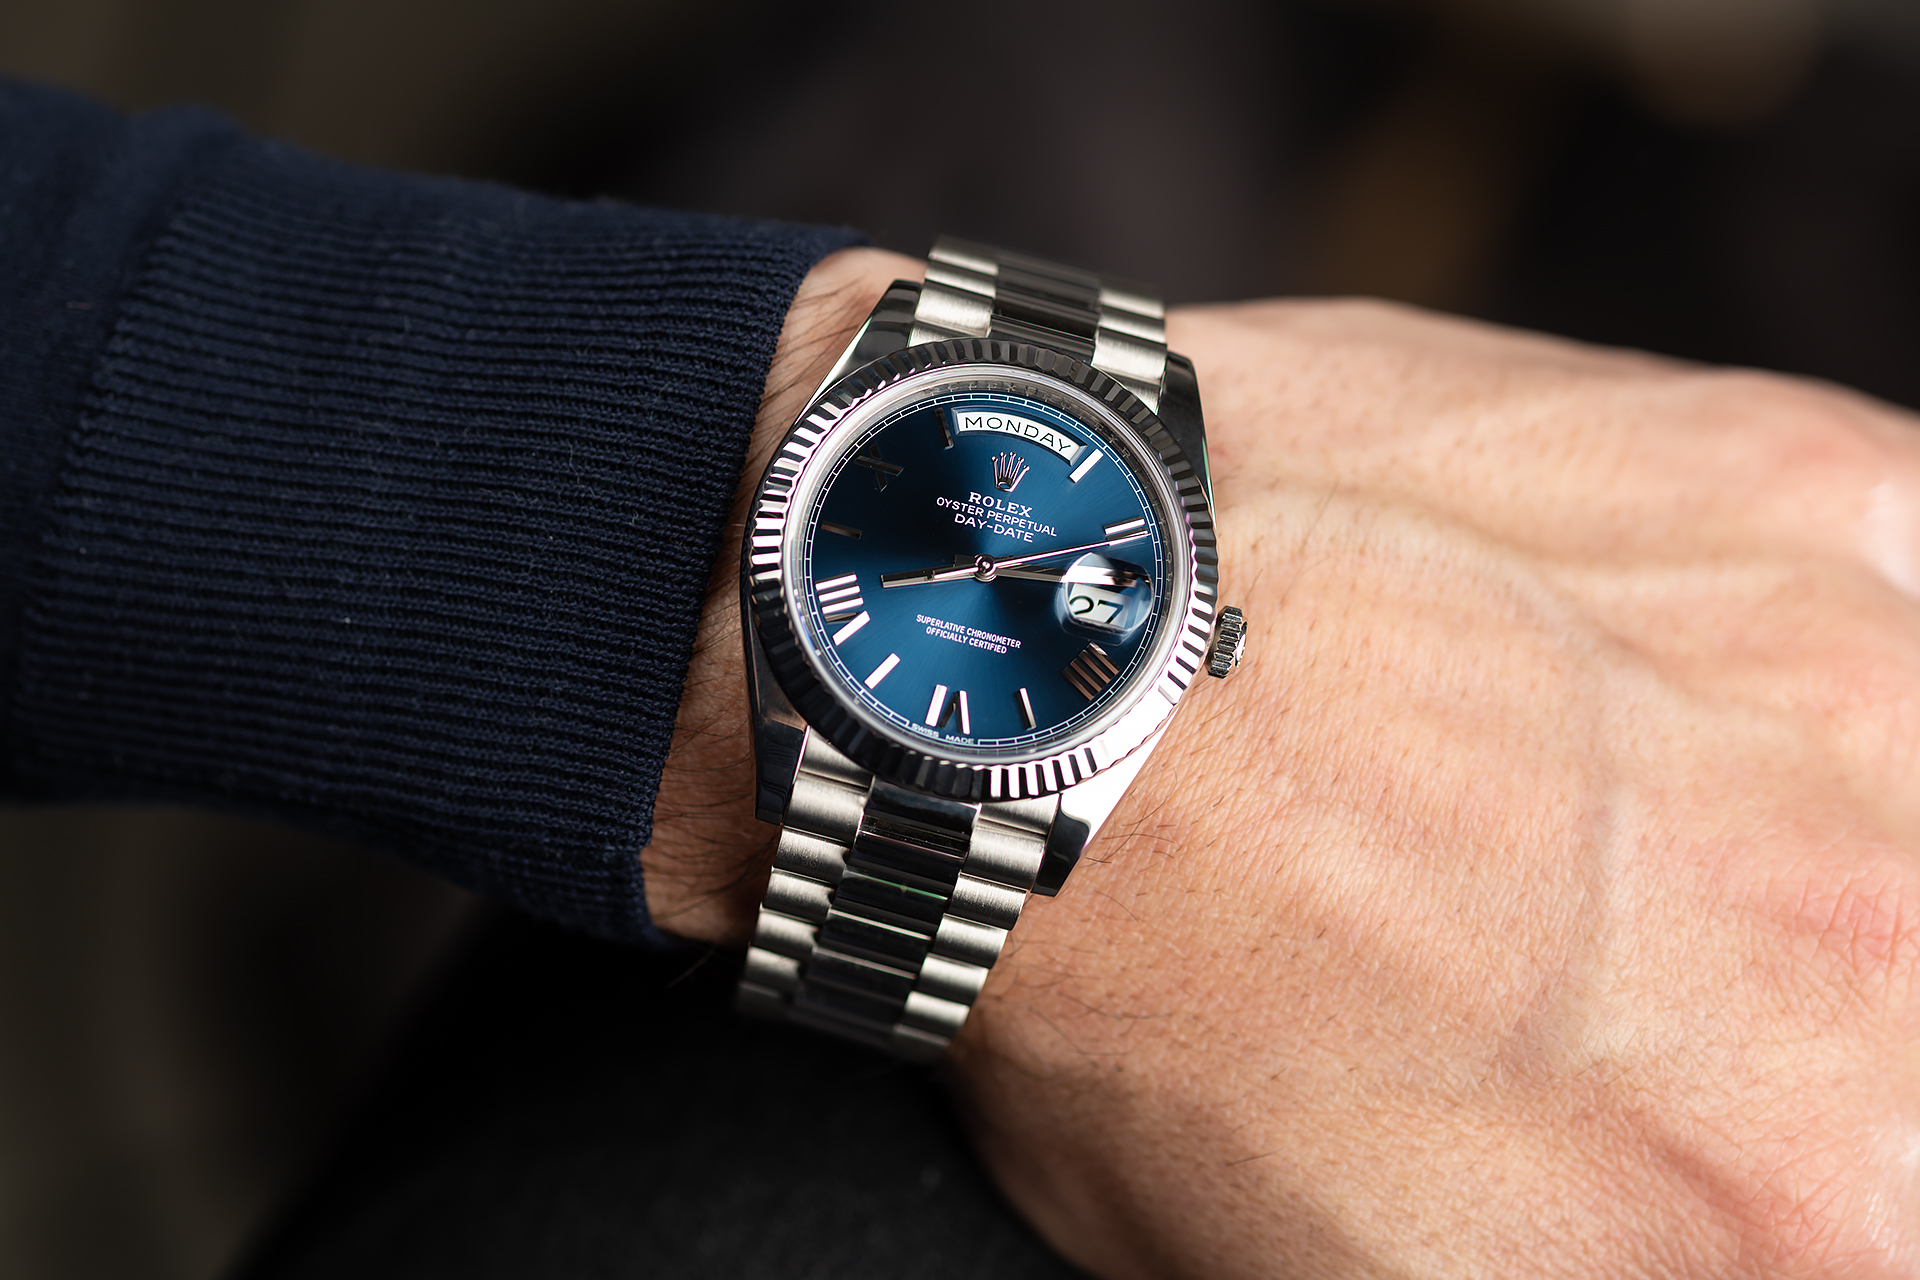 Rolex Day-Date Watches | ref 228239 | 5 Year Warranty 'Blue | The Watch Club